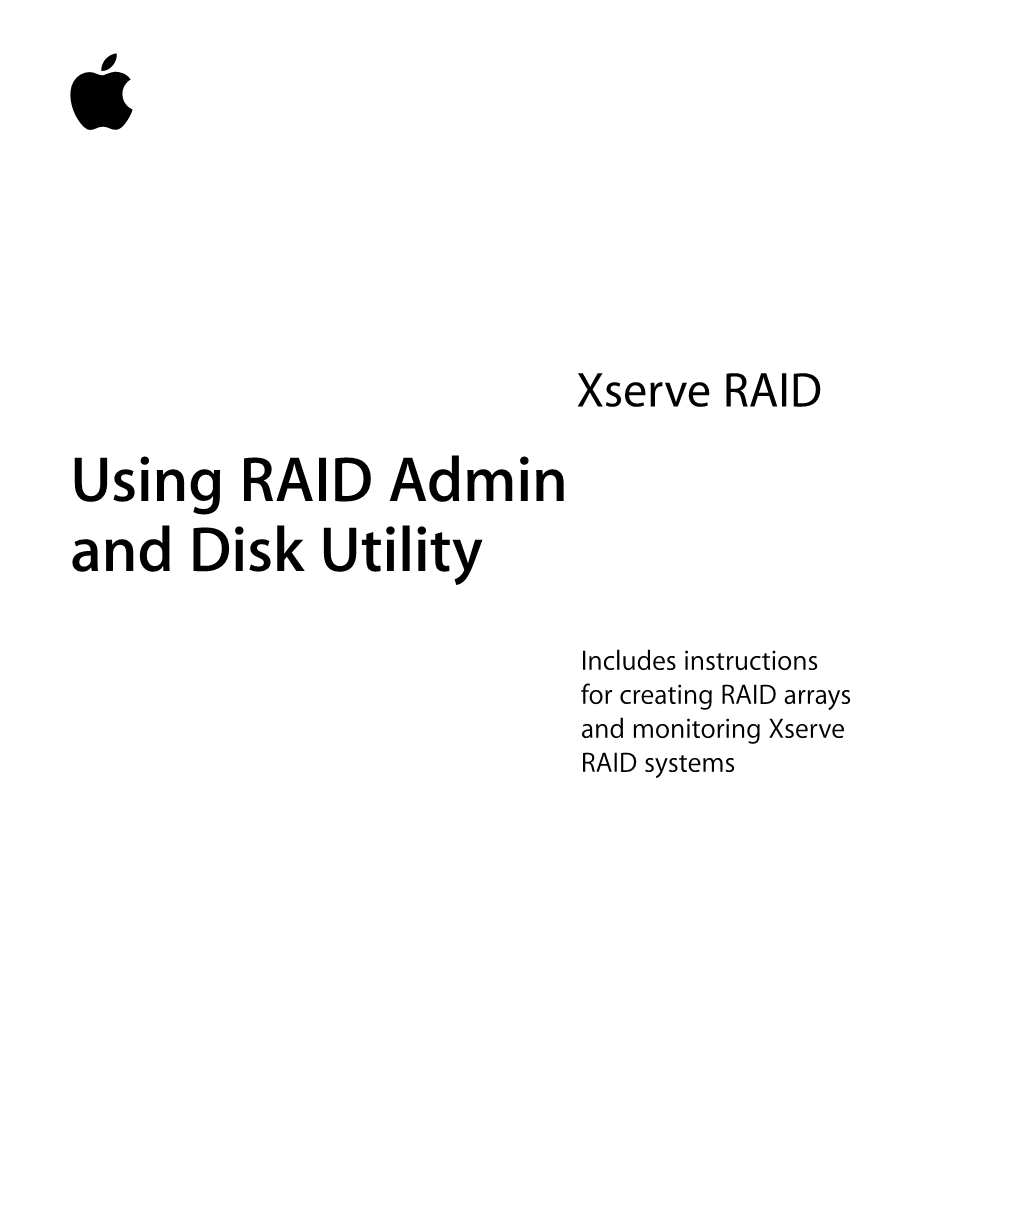 Using Xserve RAID and Disk Utility (Manual)